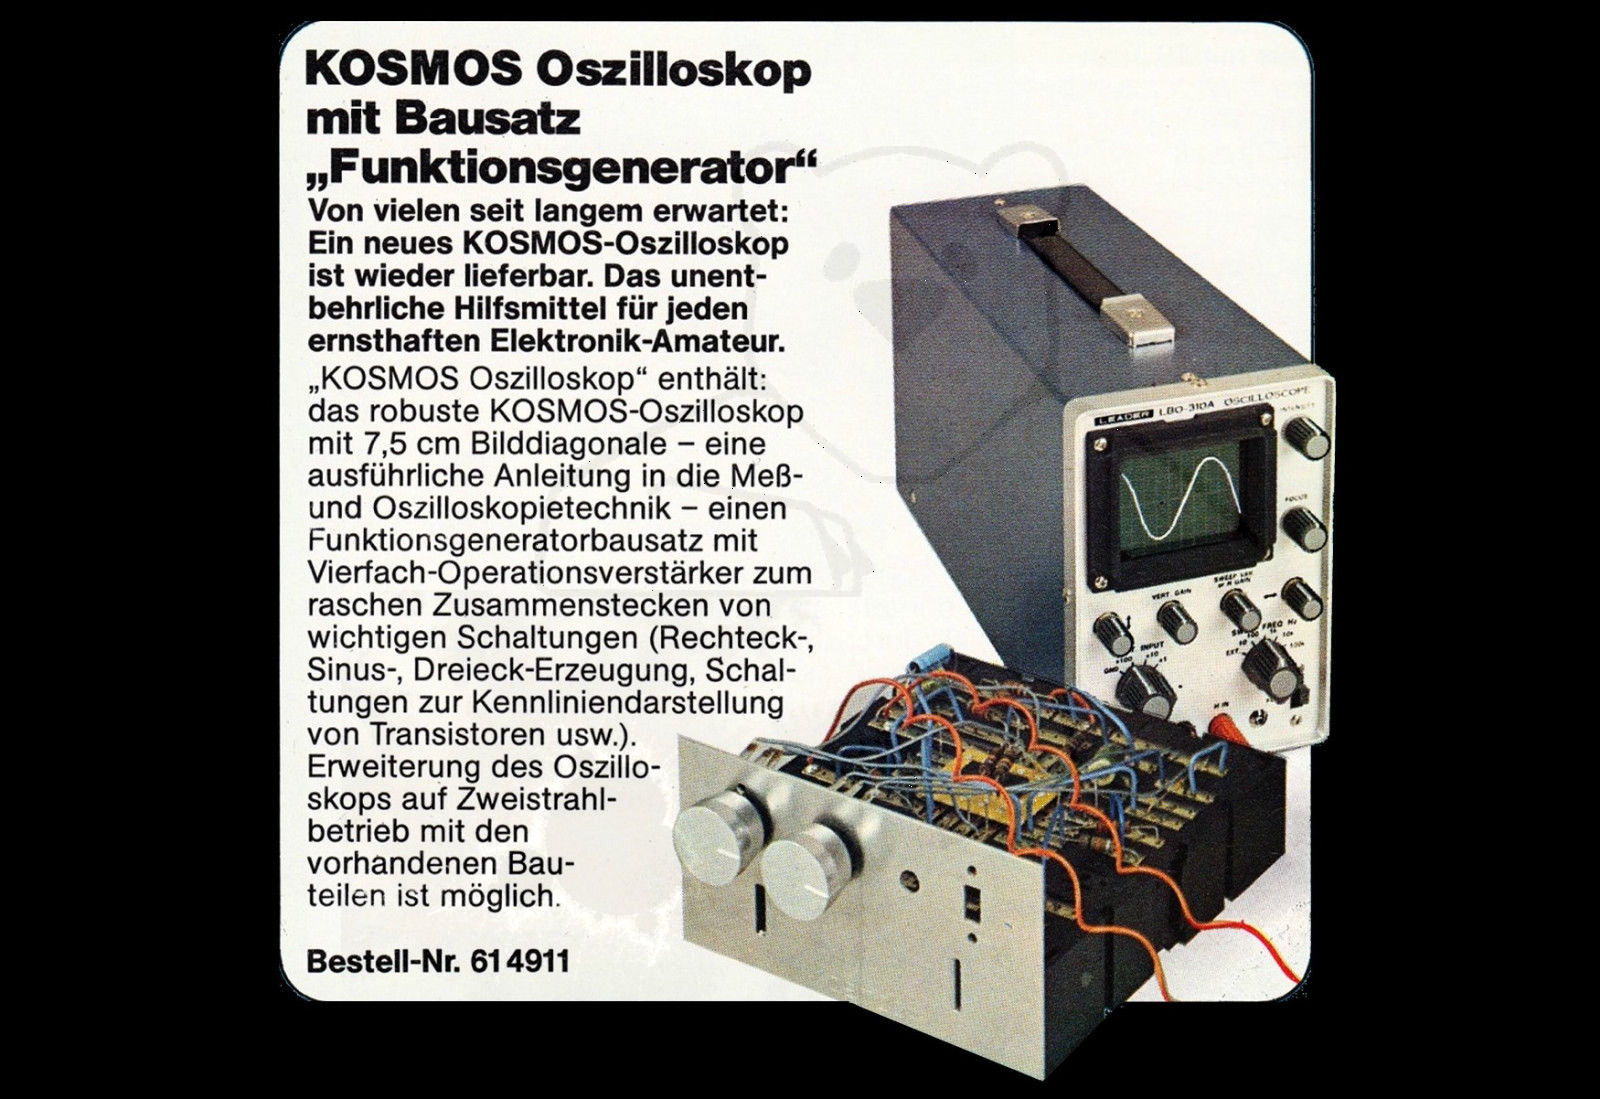 Kosmos Oszilloskop mit Funktionsgenerator - Prospekt Ausschnitt